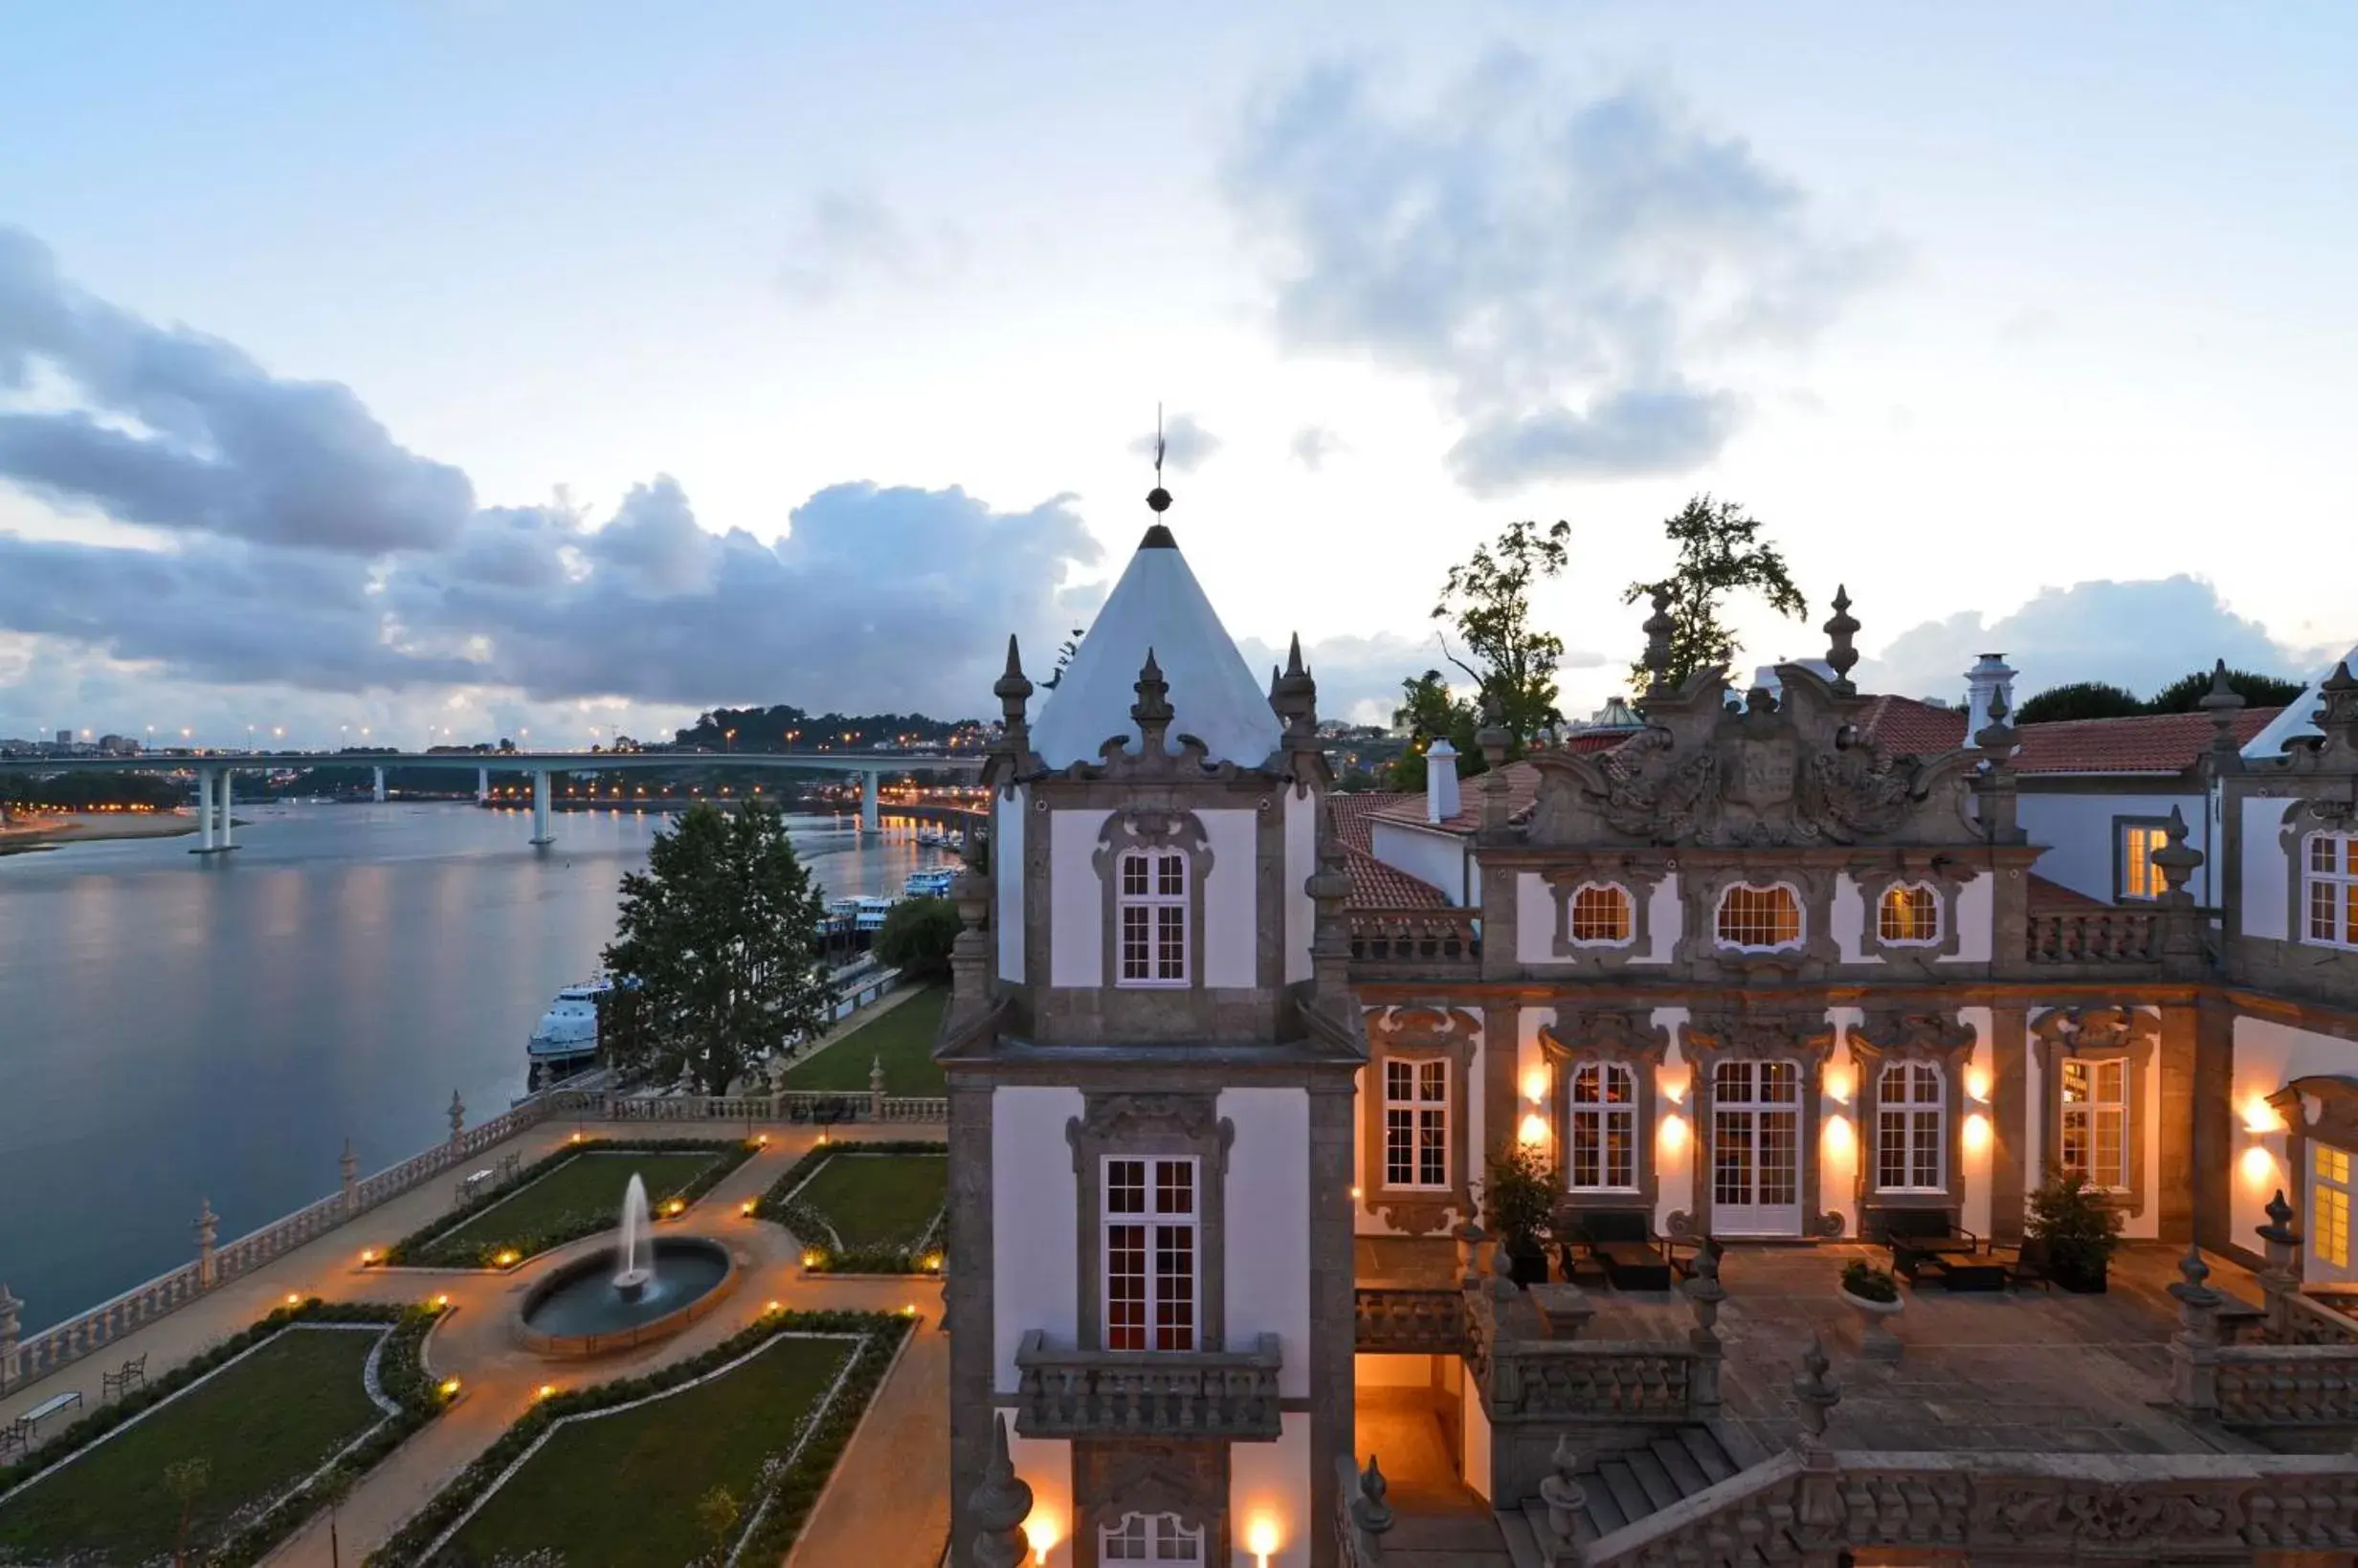 Bird's eye view in Pestana Palacio do Freixo, Pousada & National Monument - The Leading Hotels of the World